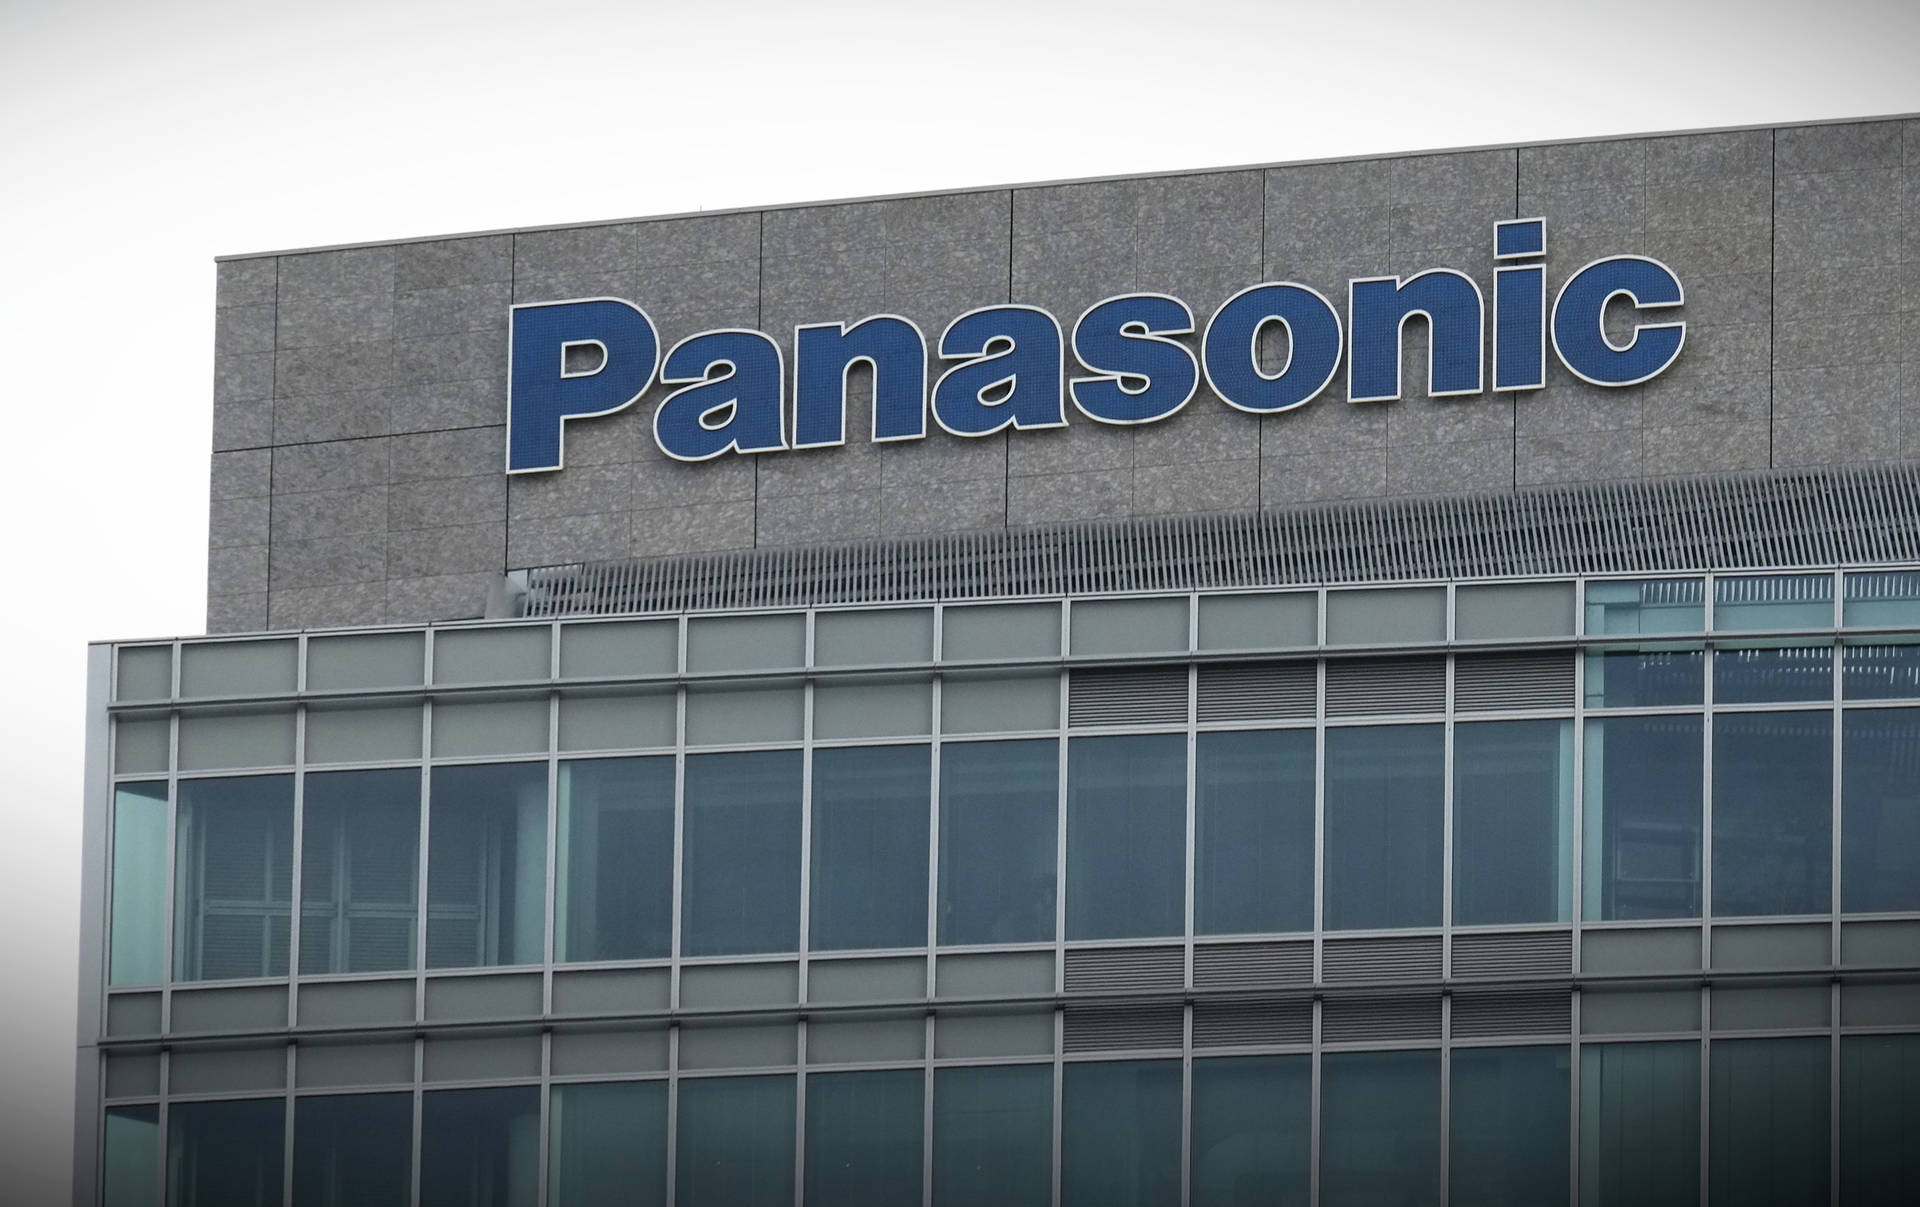 Panasonicgrey Building Wallpaper